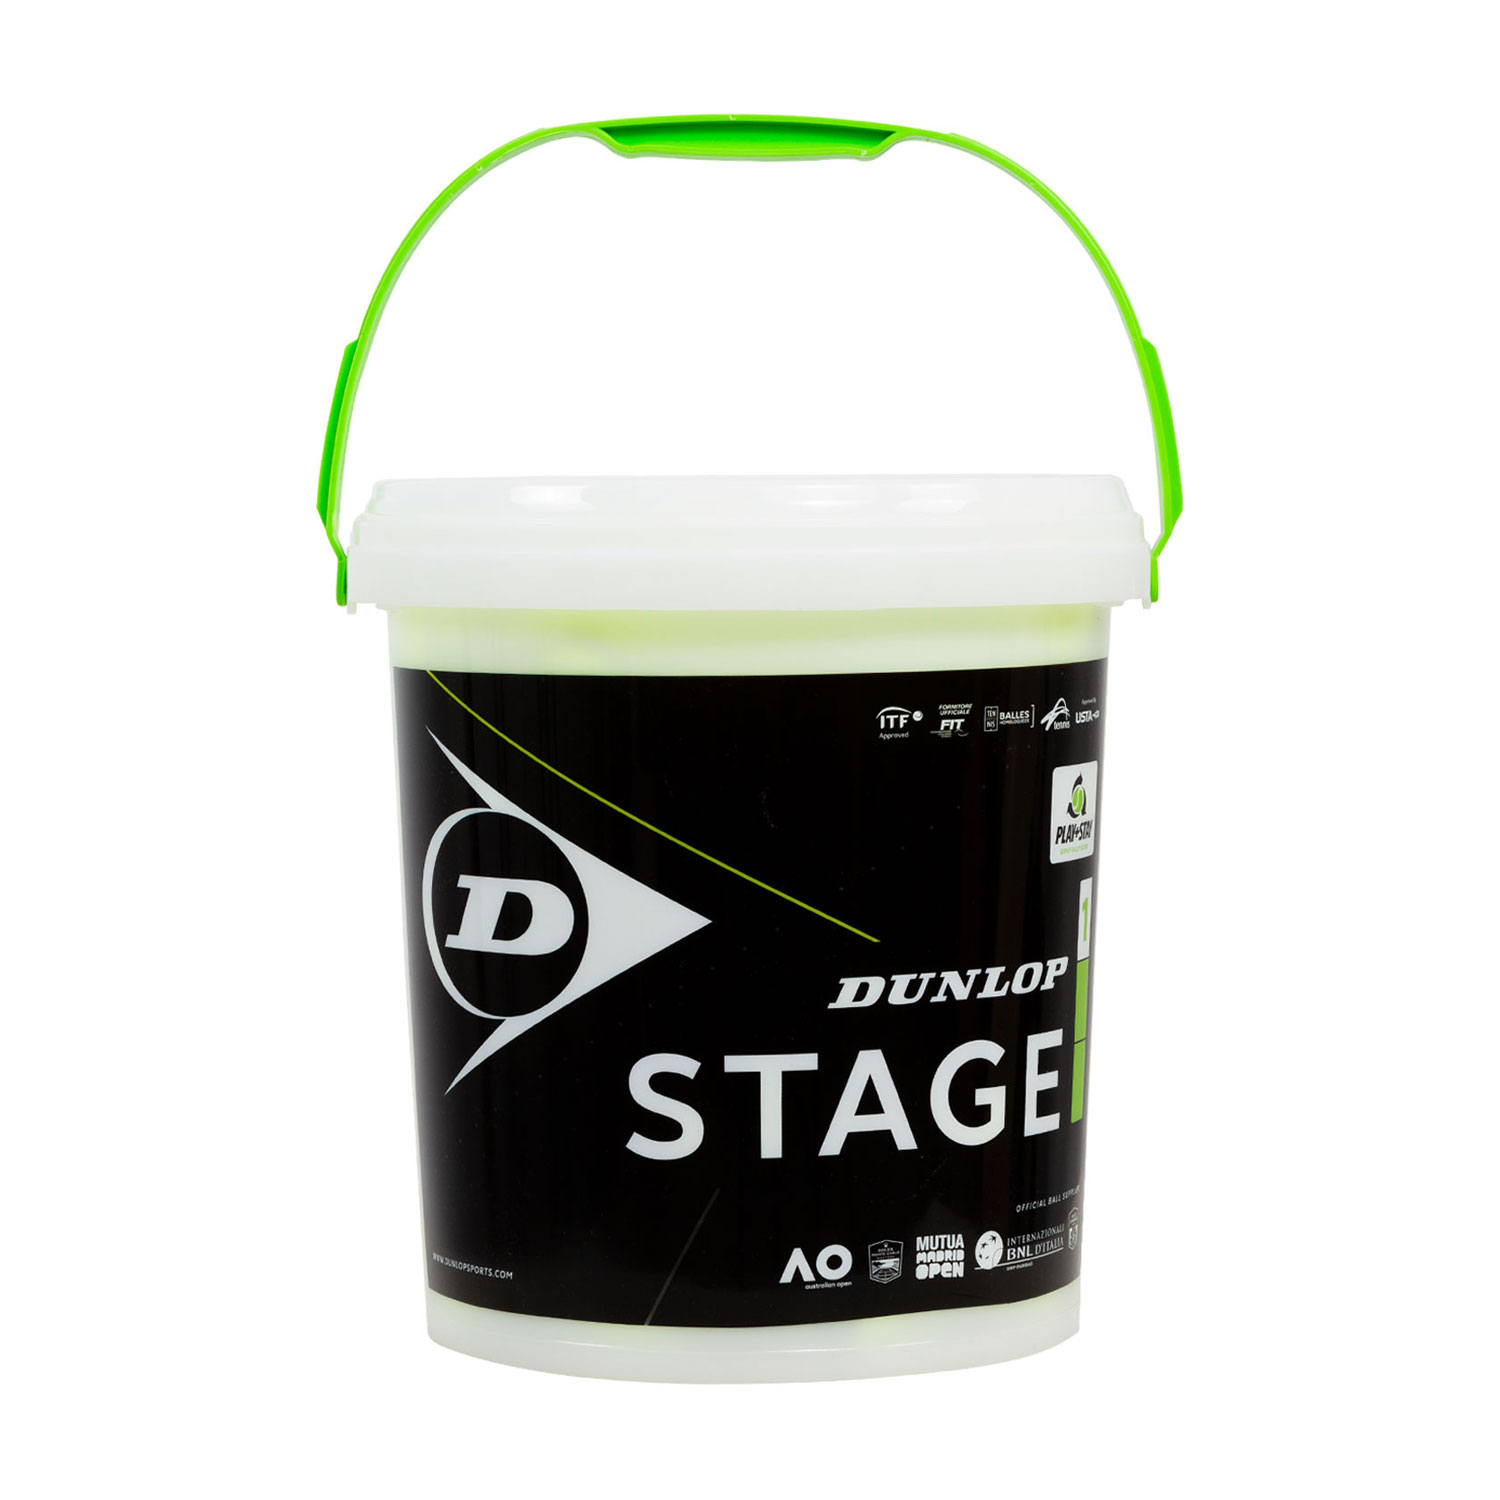 Dunlop Stage 1 Green - 60 Ball Barrel